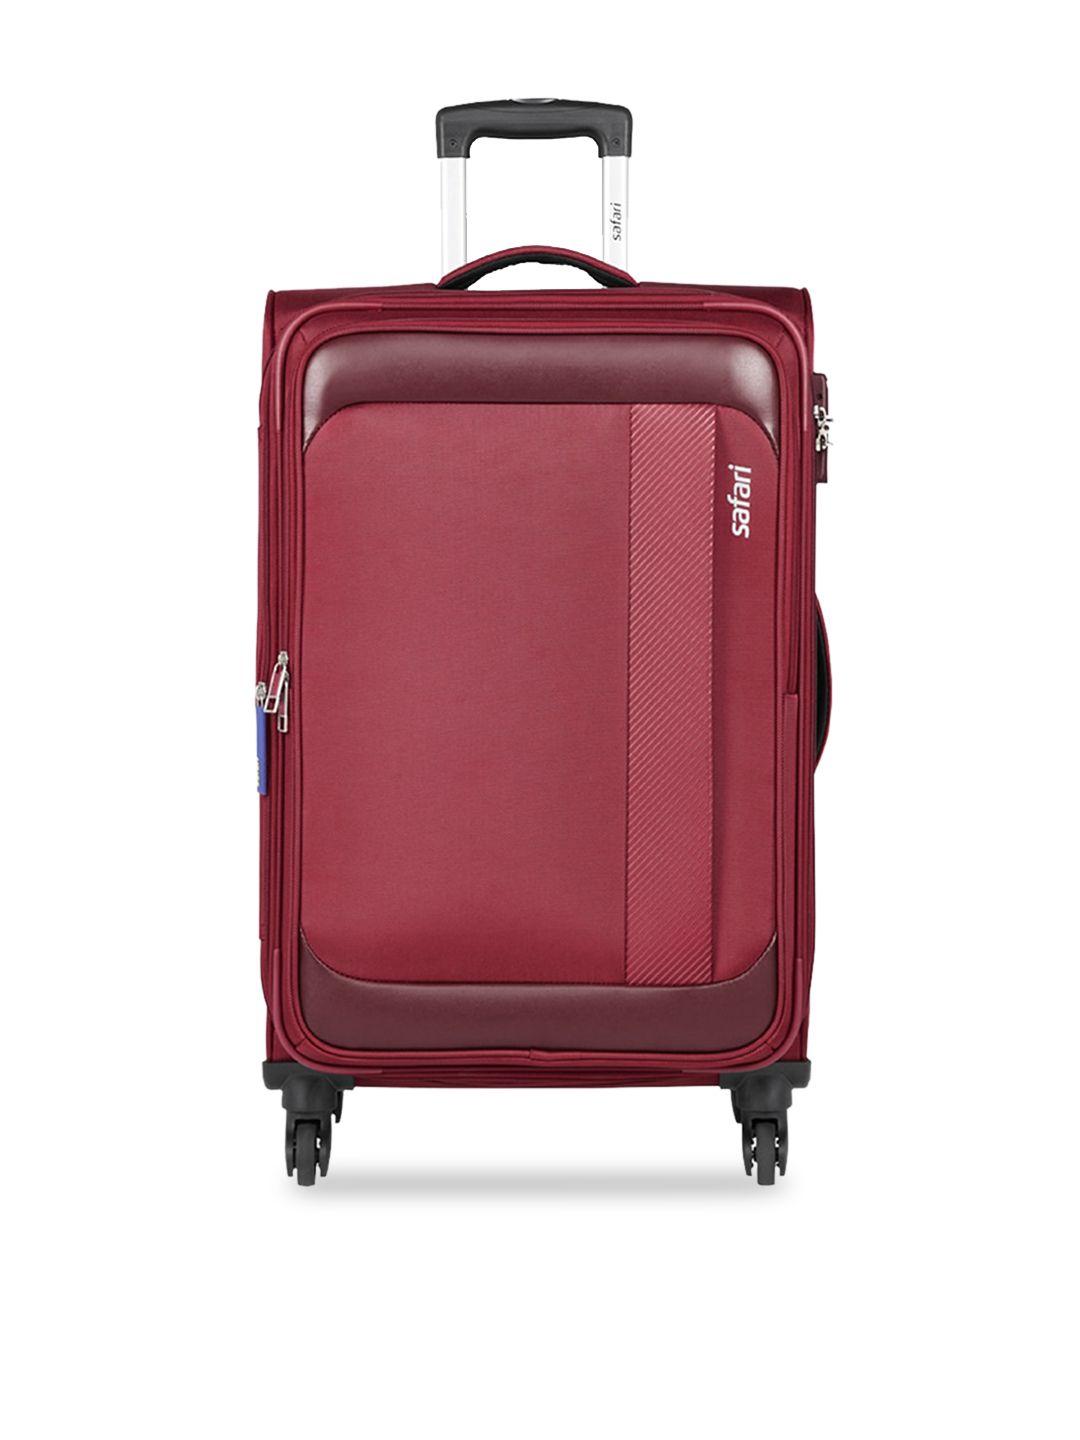 safari soft-sided large trolley suitcase